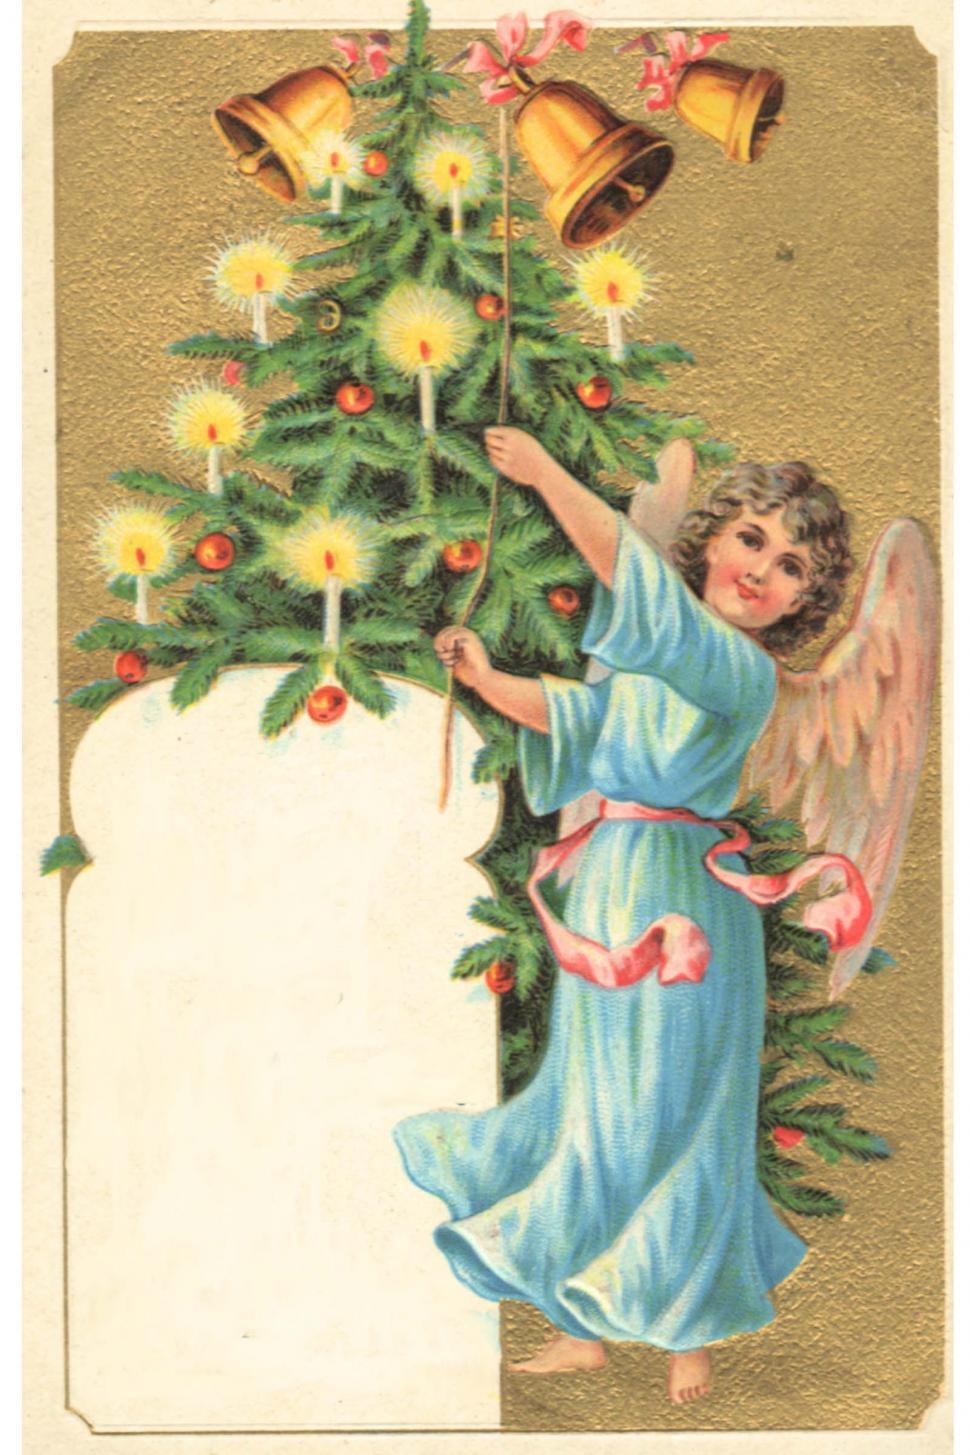 Free Image of Christmas Card 